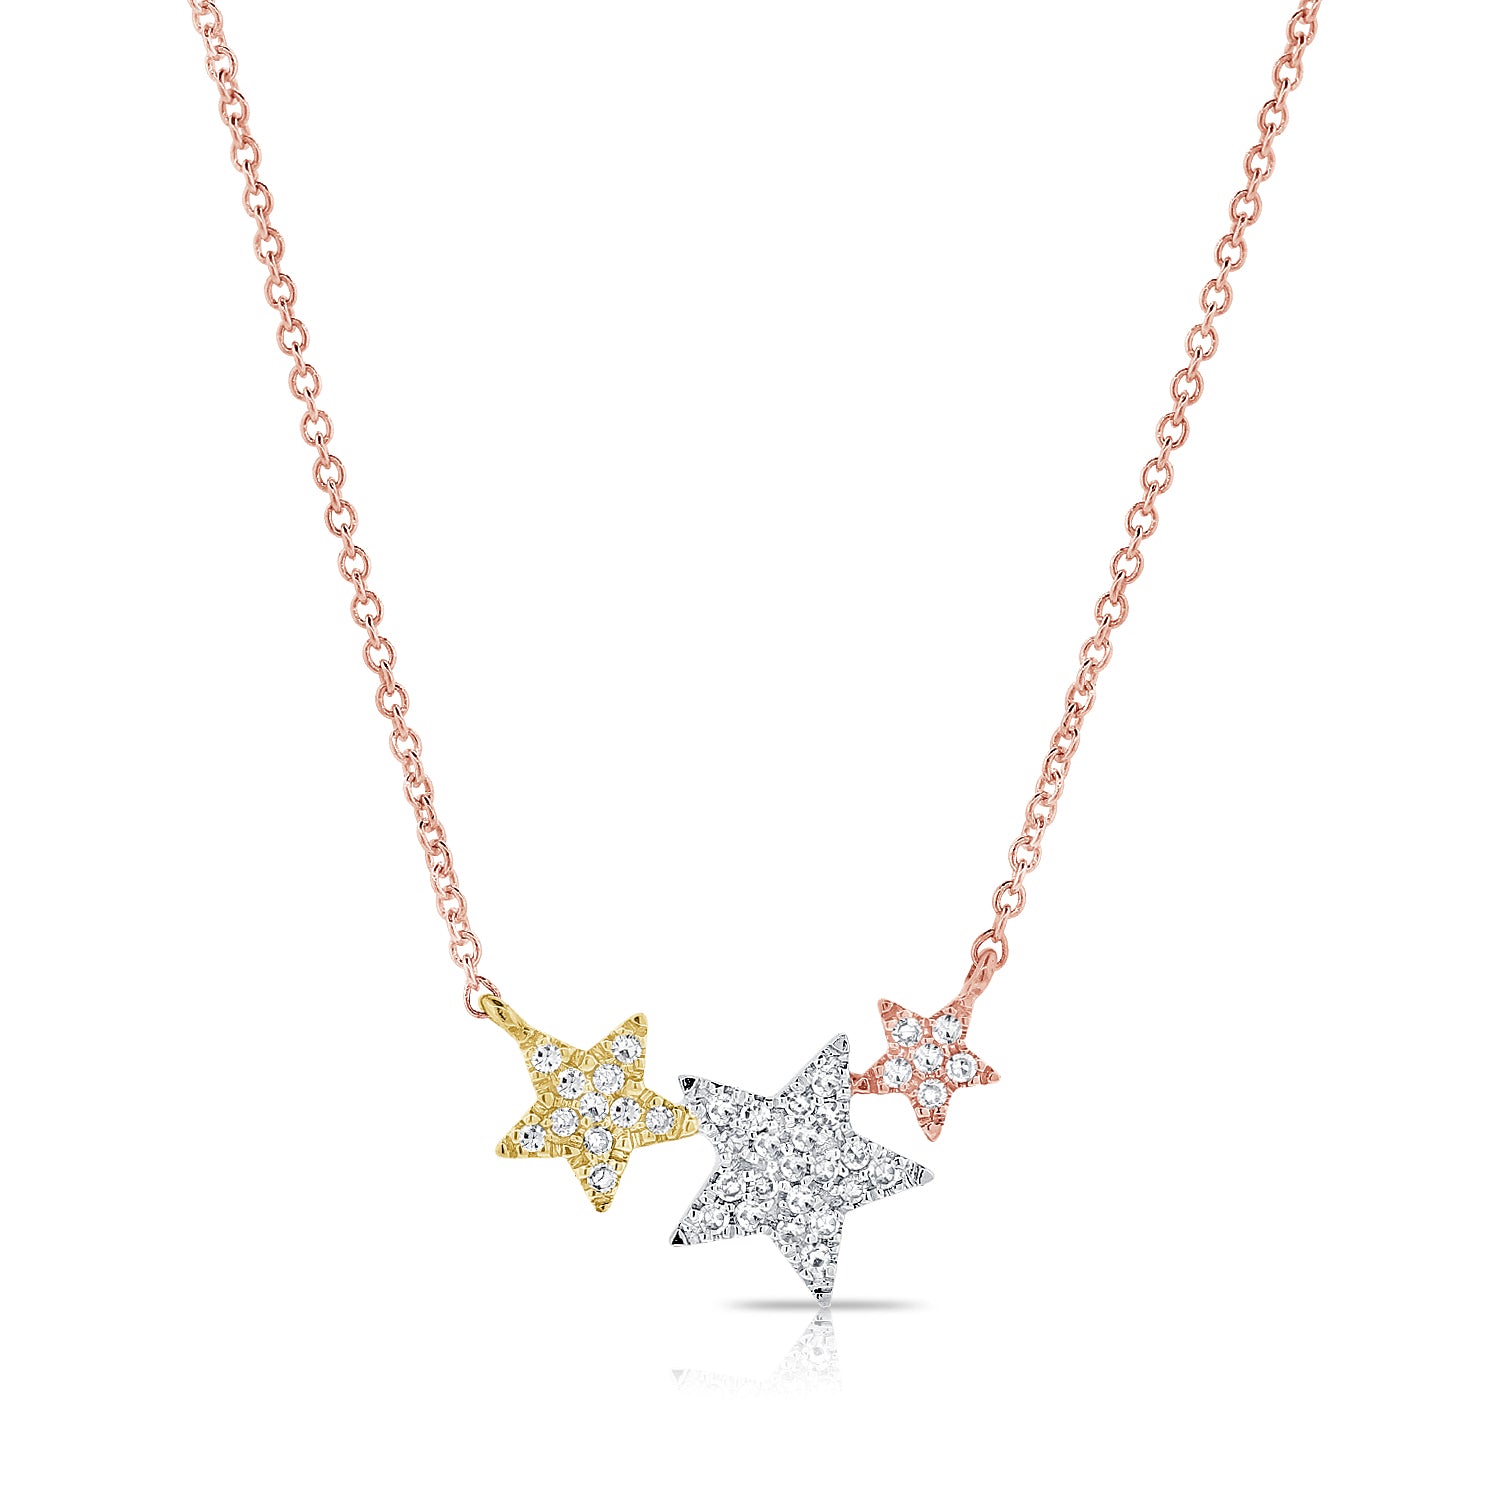 14K Gold Two-Tone Diamond Star Necklace